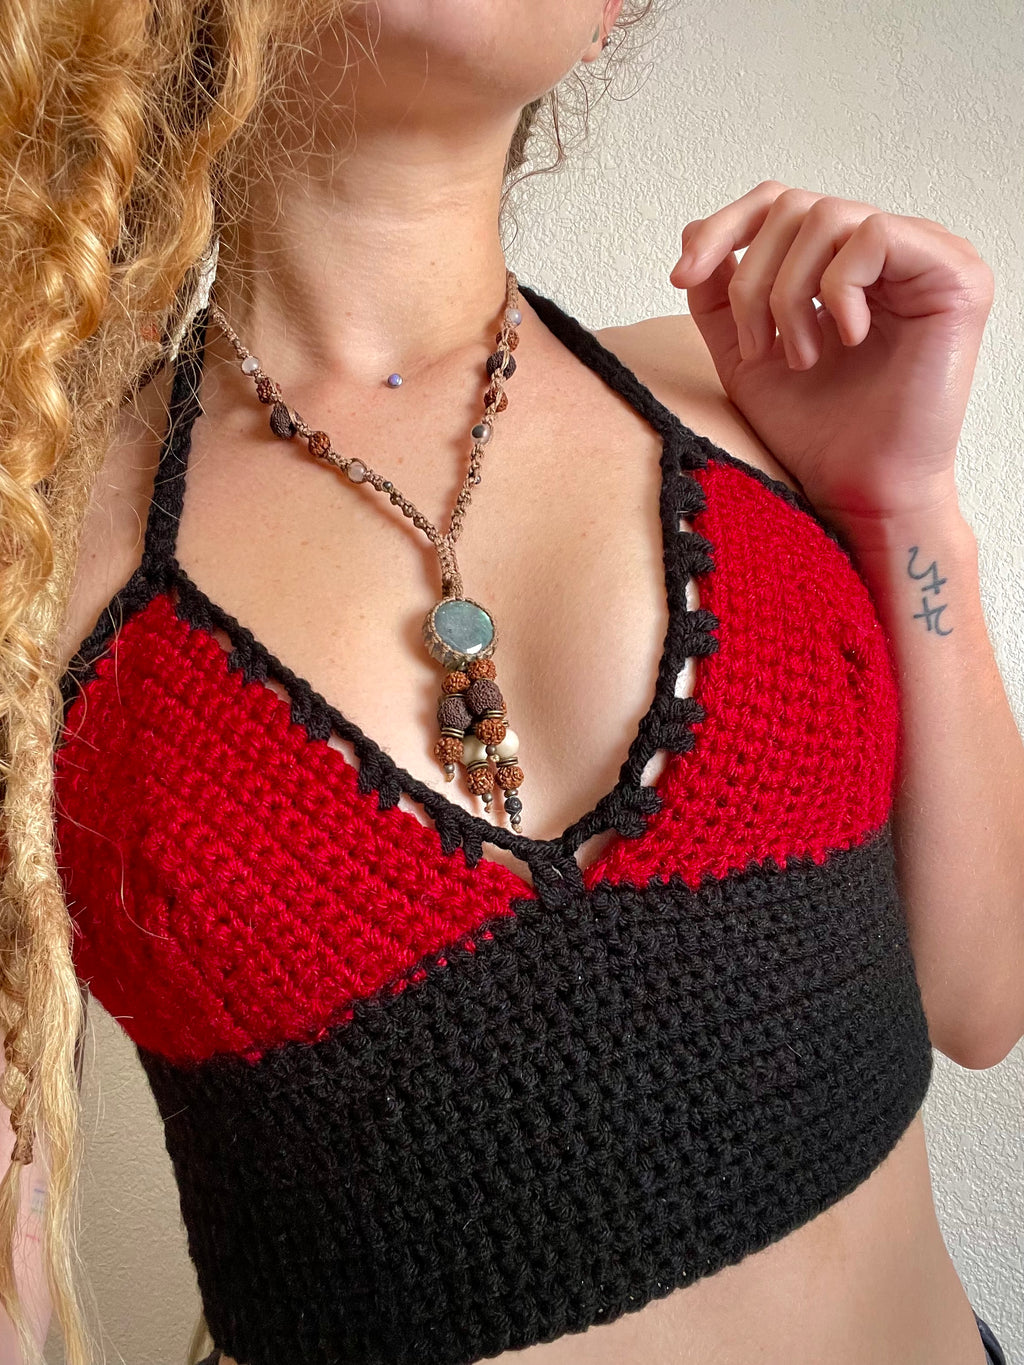 ~ Black & Red “SpiderCherry” Crochet Halter Top ~ Cup Size A/B